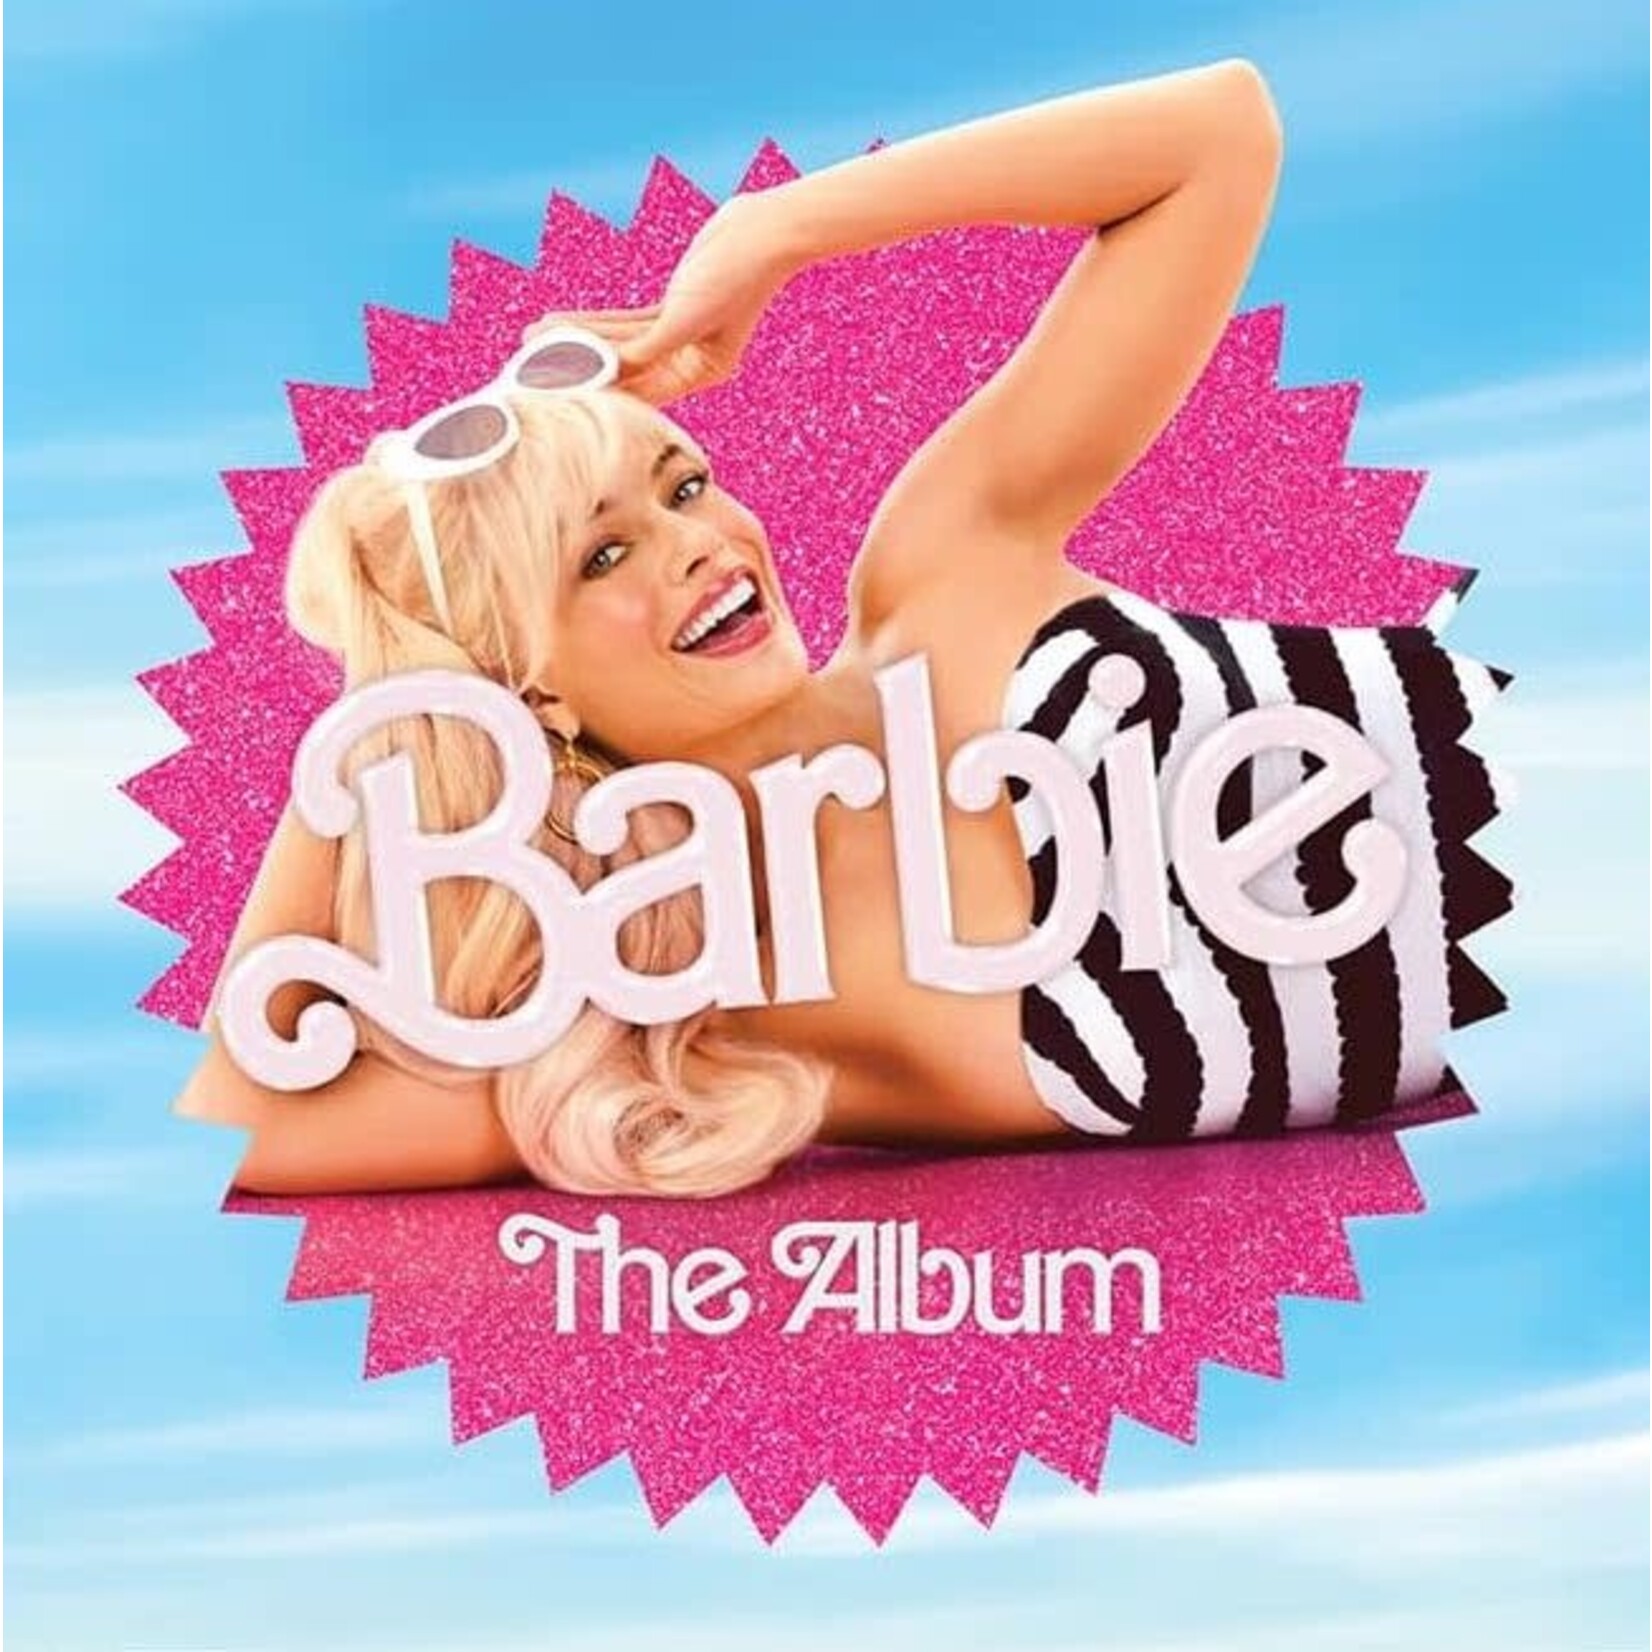 Barbie  The Album  Soundtrack.  (Hot Pink Vinyl)